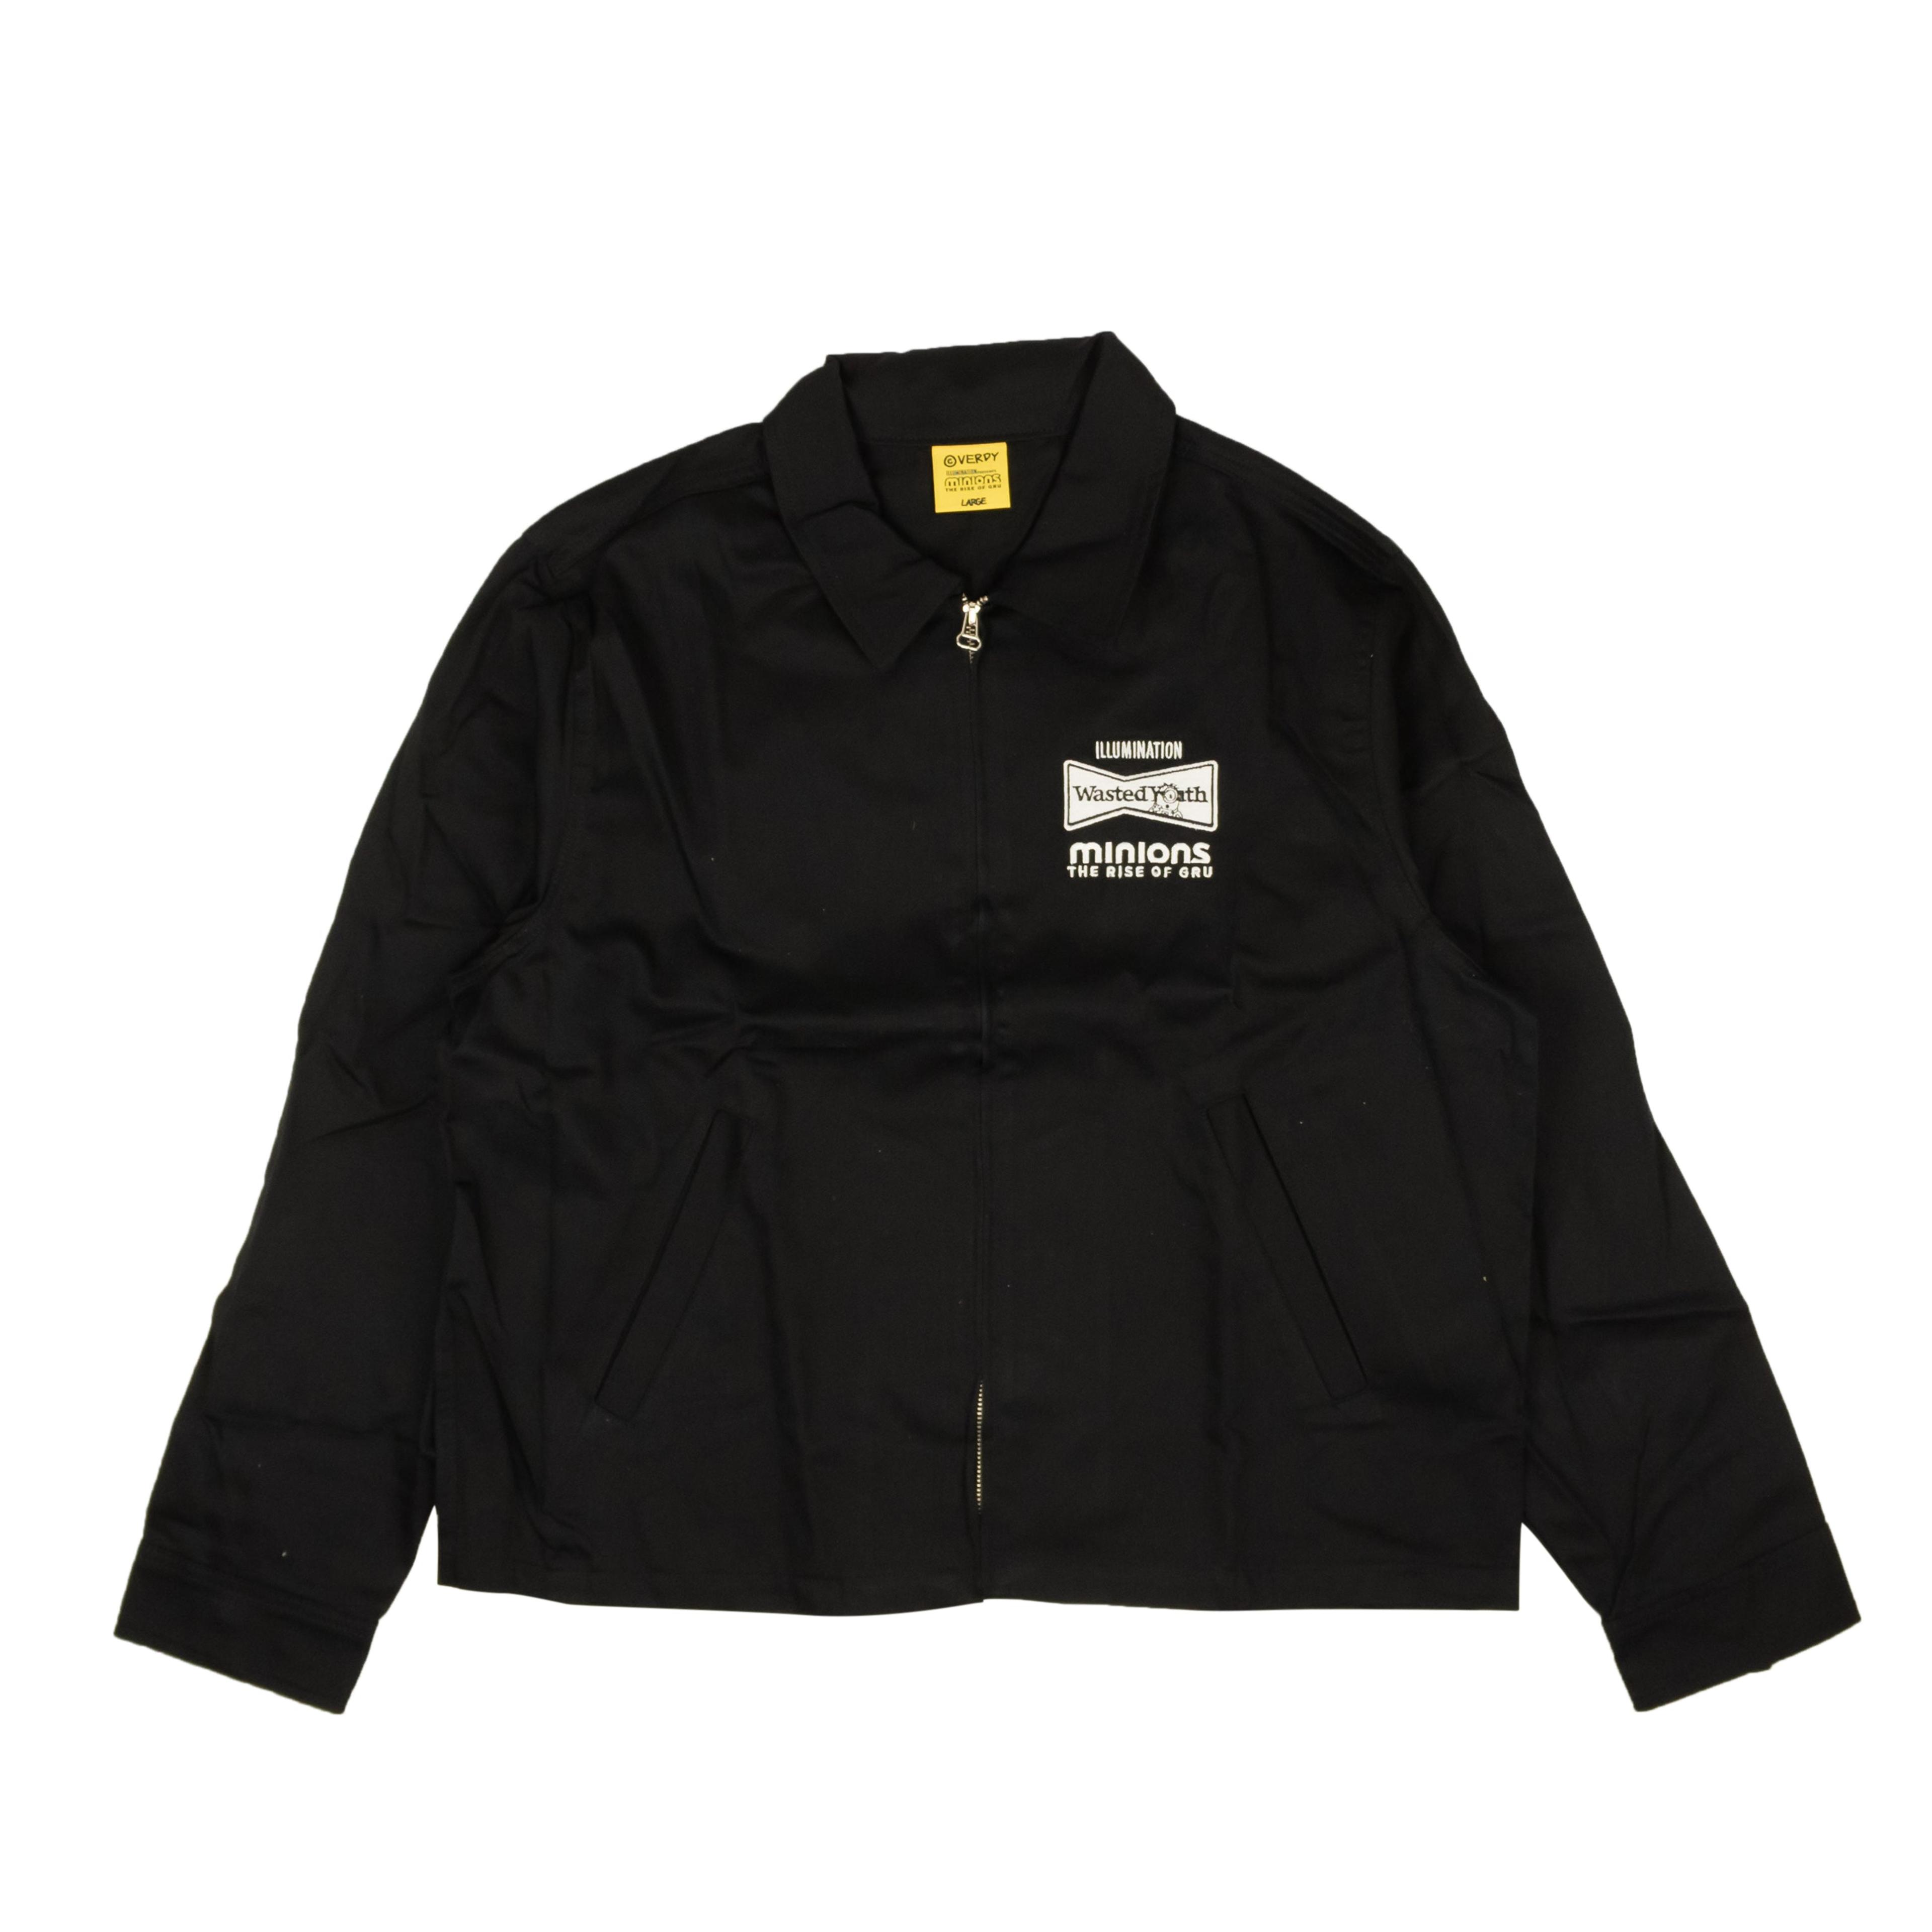 Minions Black Zip-Up Jacket